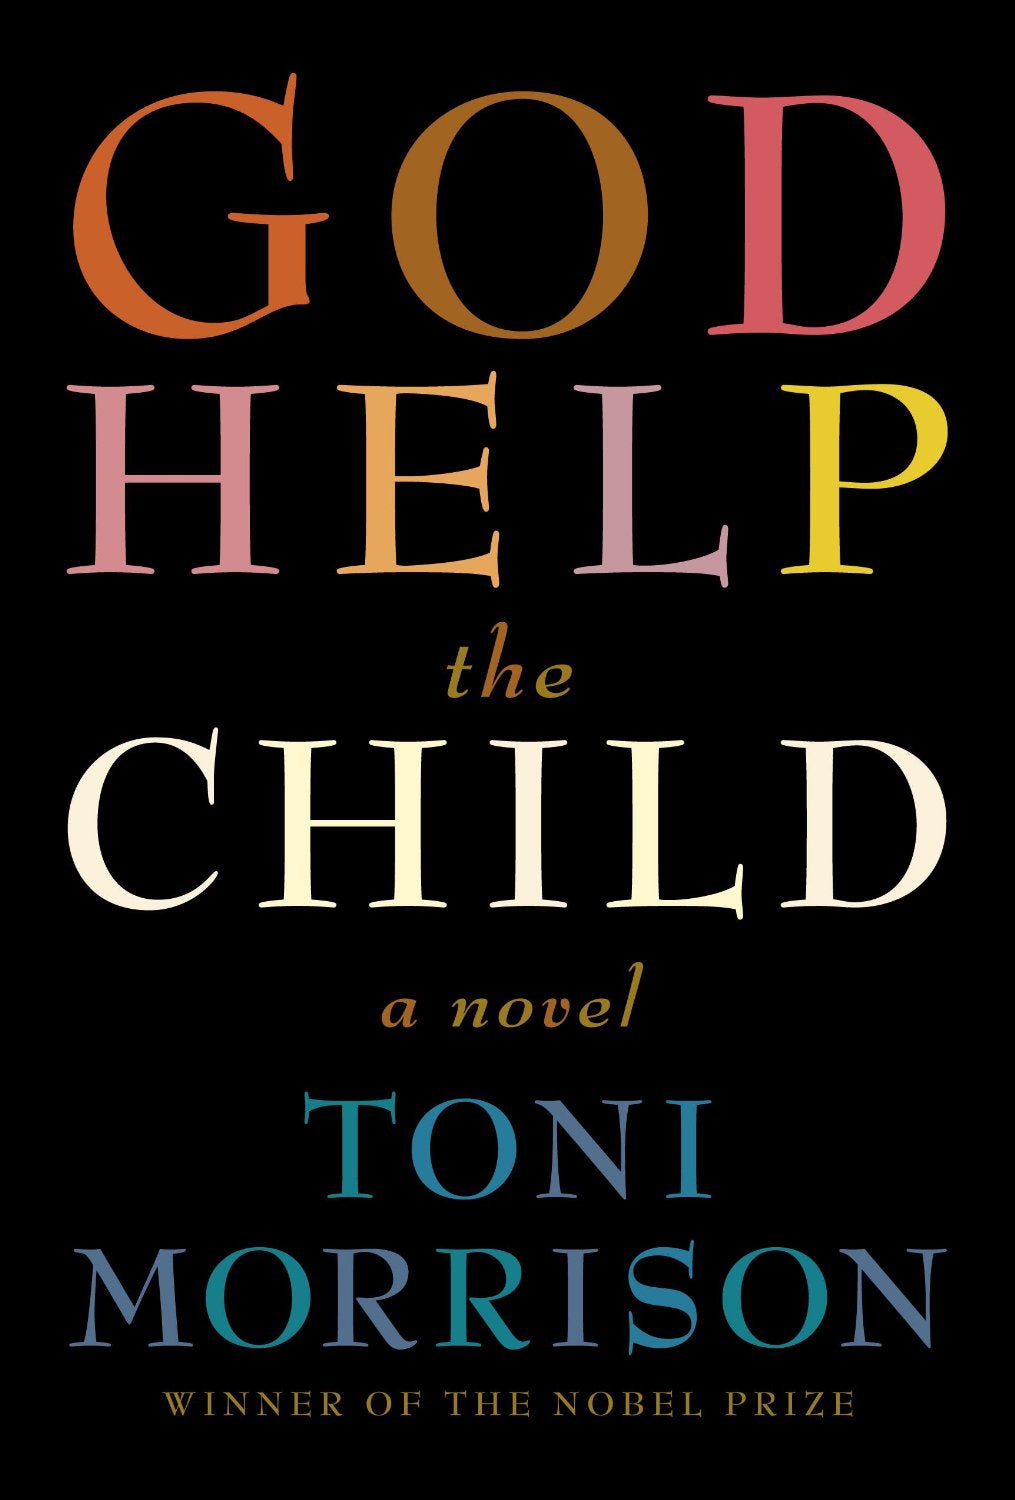 REVIEW: Toni Morrison's Latest Novel, 'God Help the Child,' Mesmerizes Readers